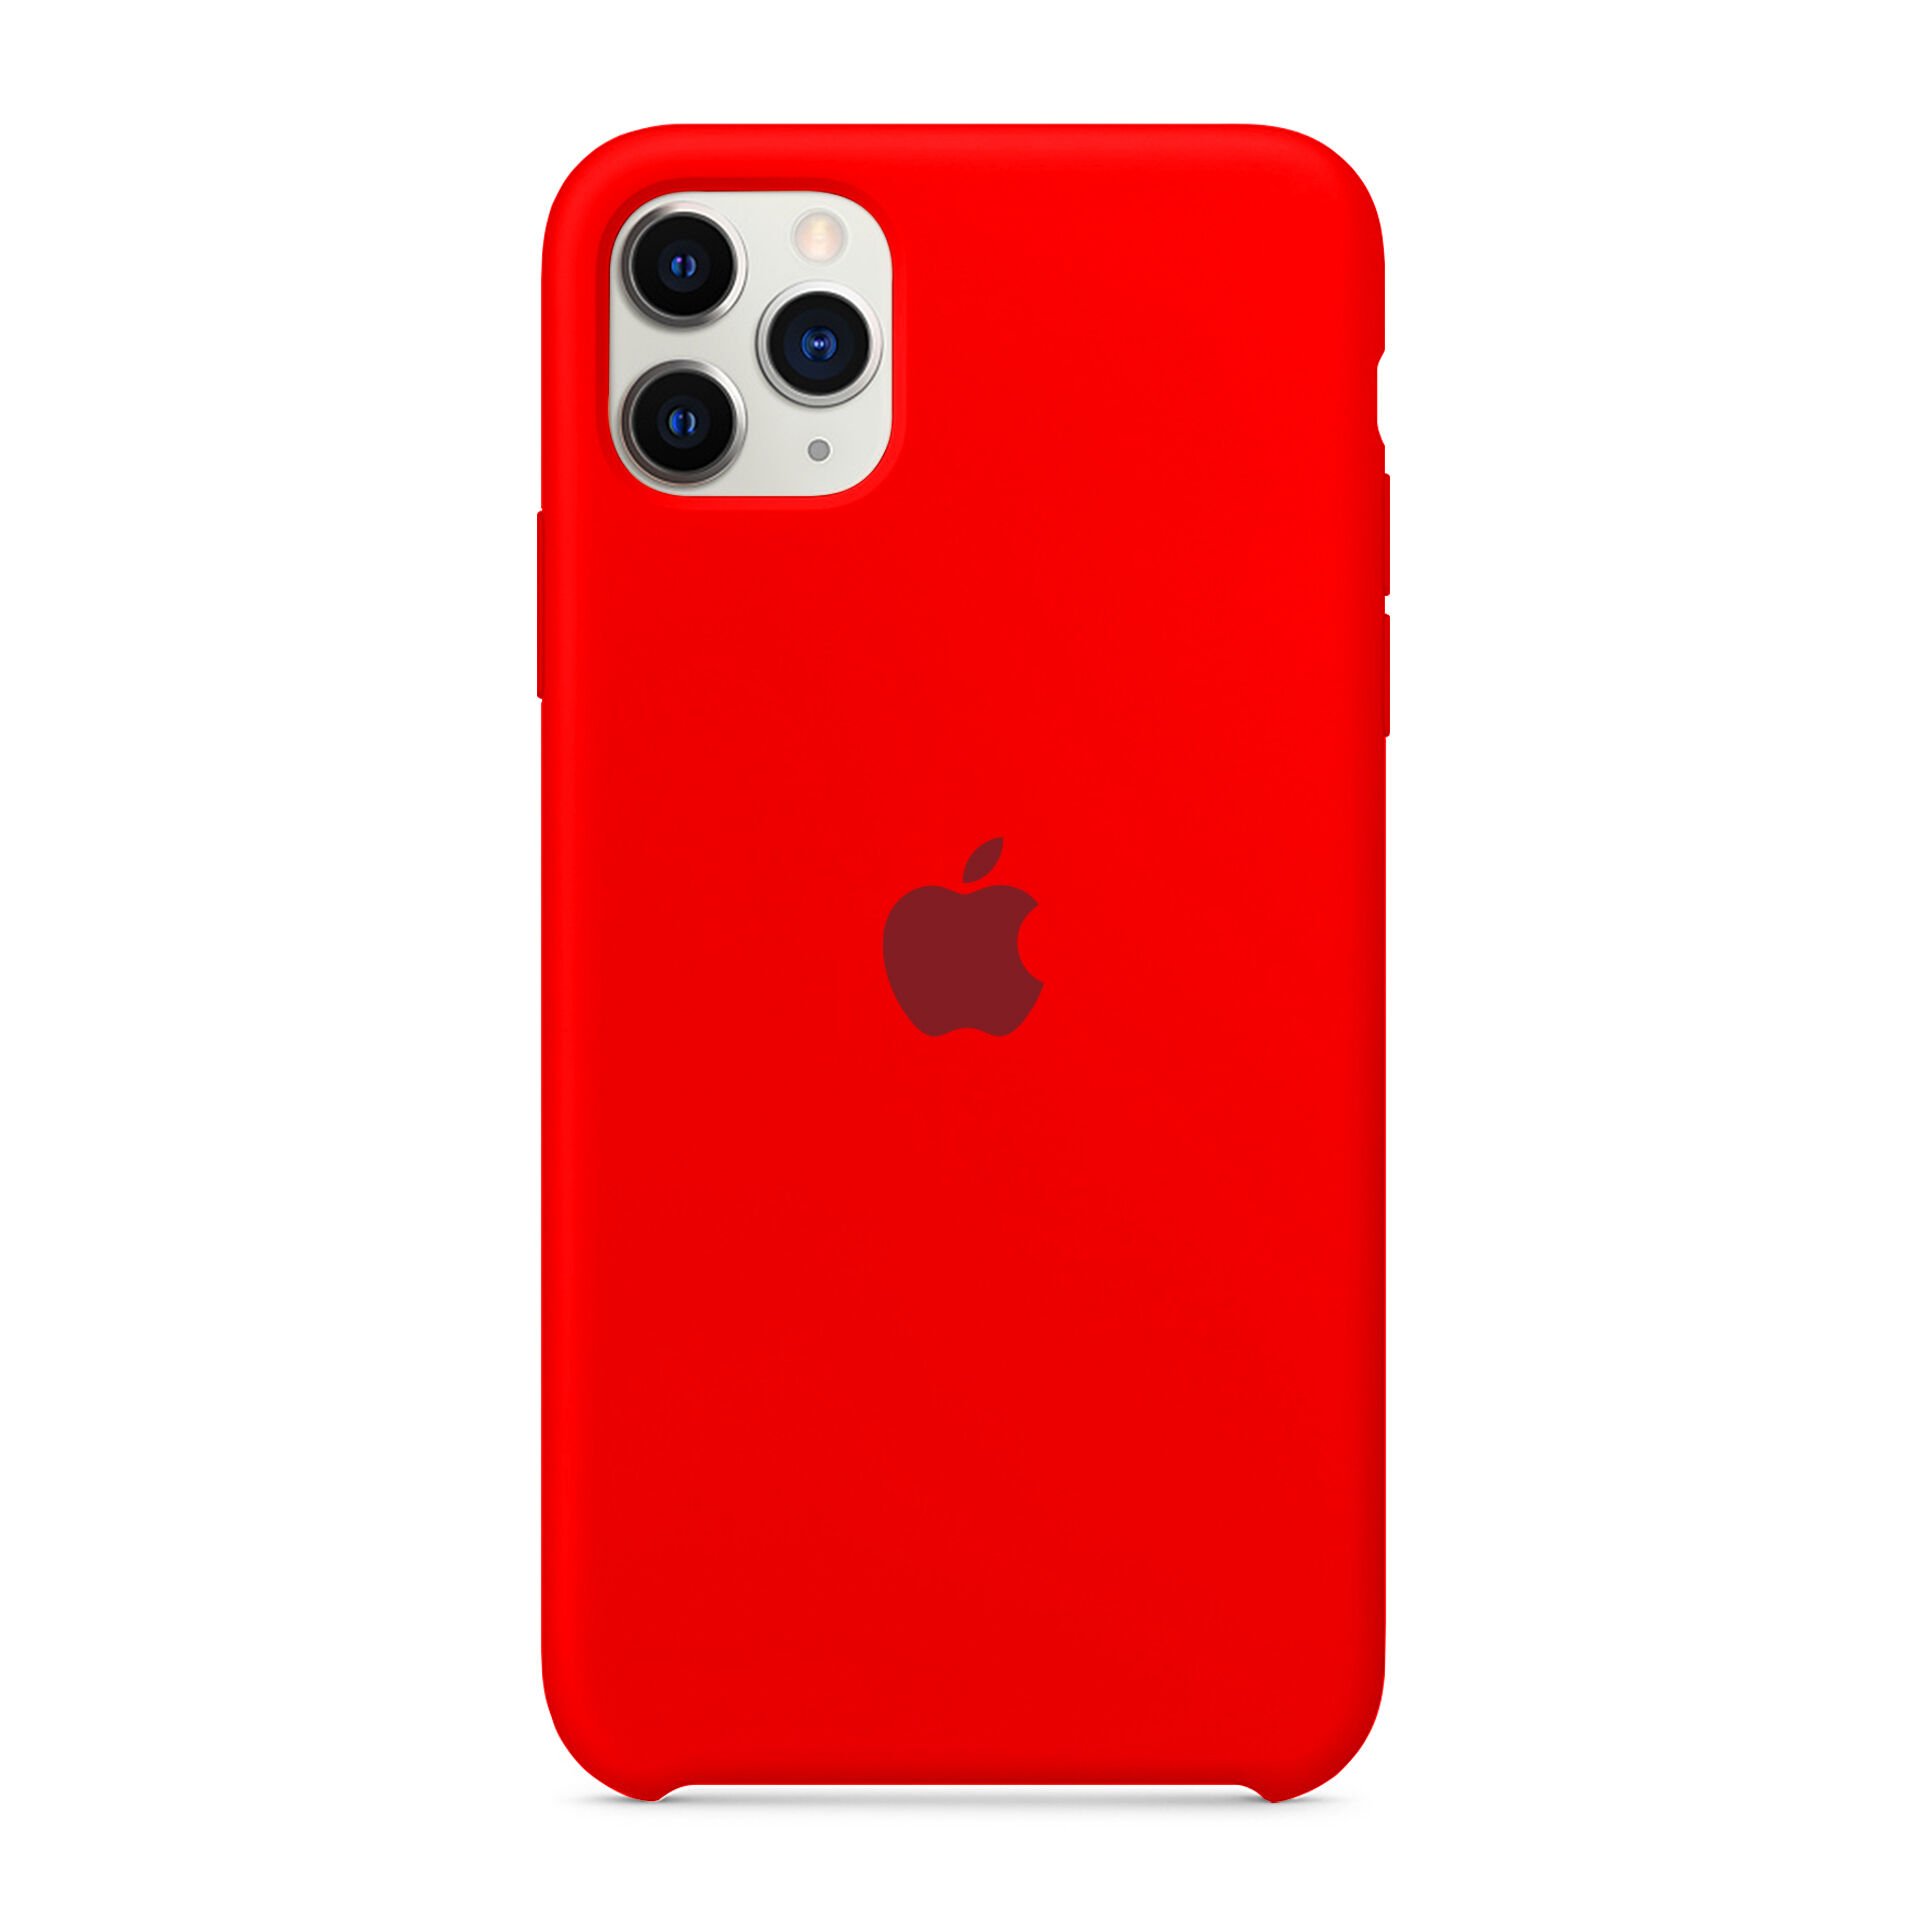 Apple Capa silicone Vermelho iPhone 11 Pro Max